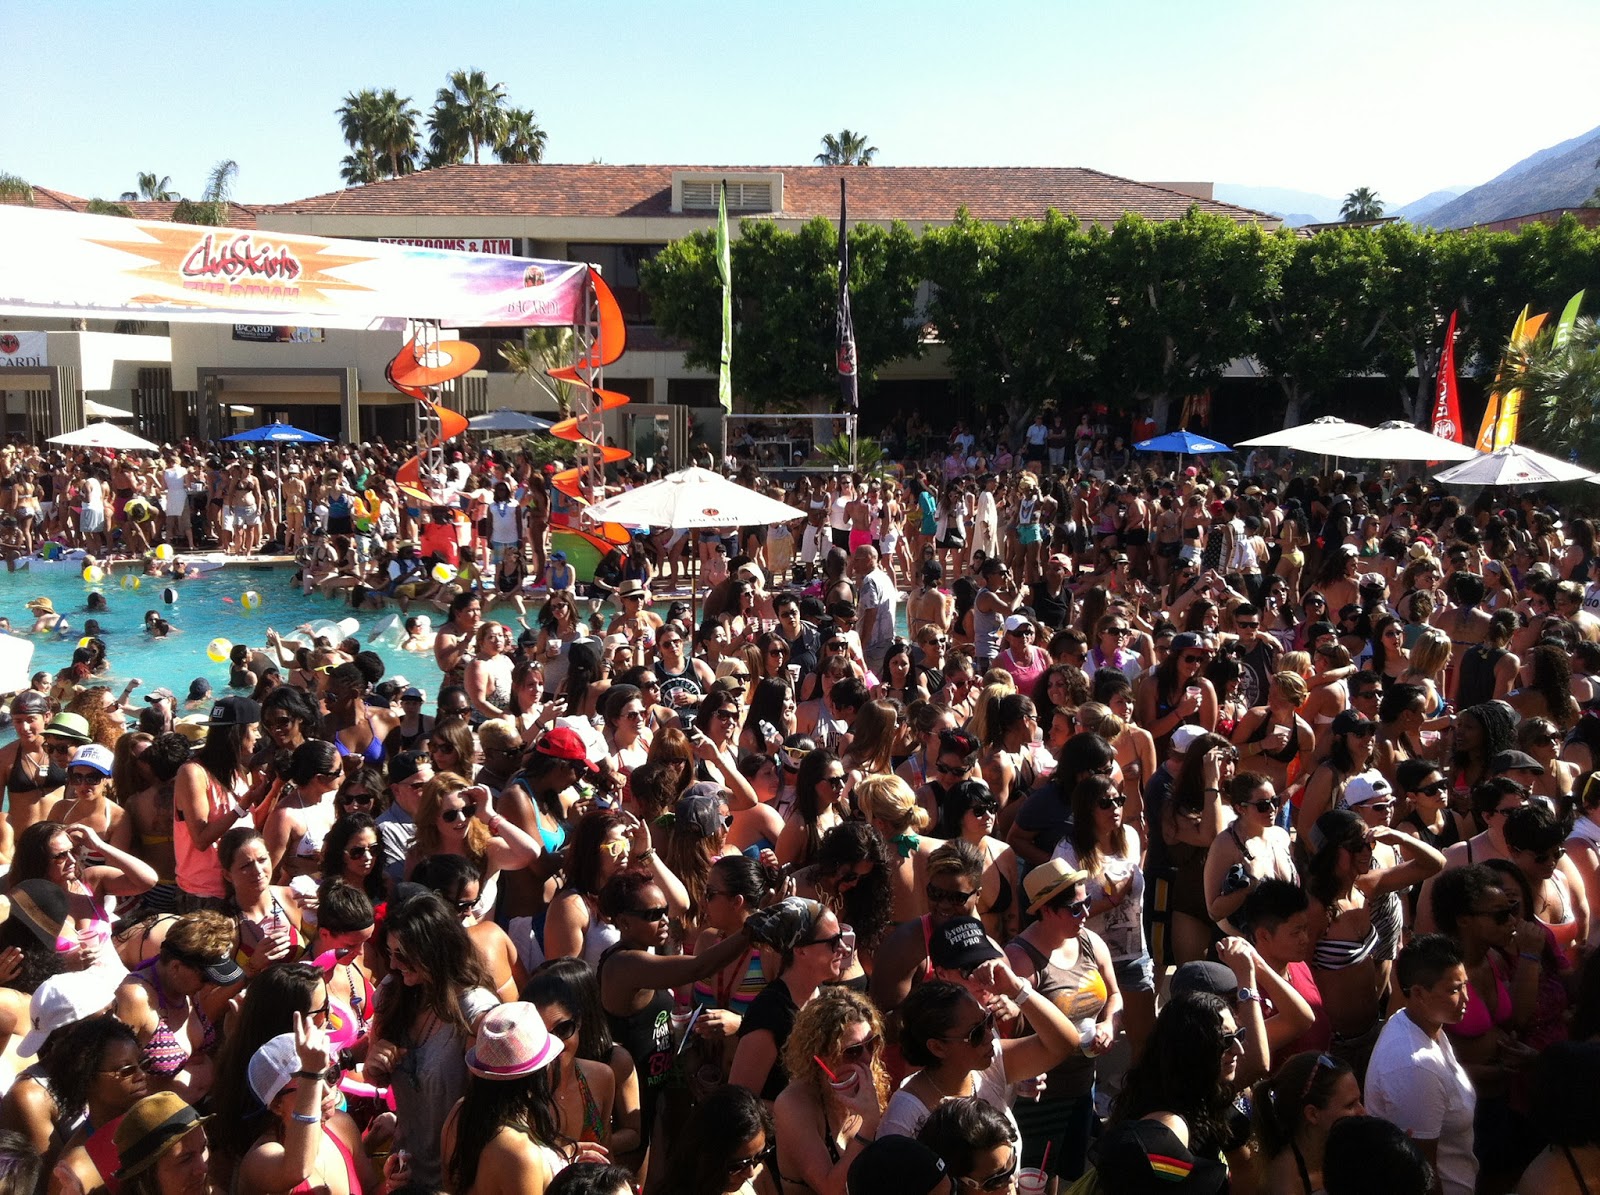 Club Skirts Dinah Shore Weekend Palm Springs Making a Splash at The Dinah!